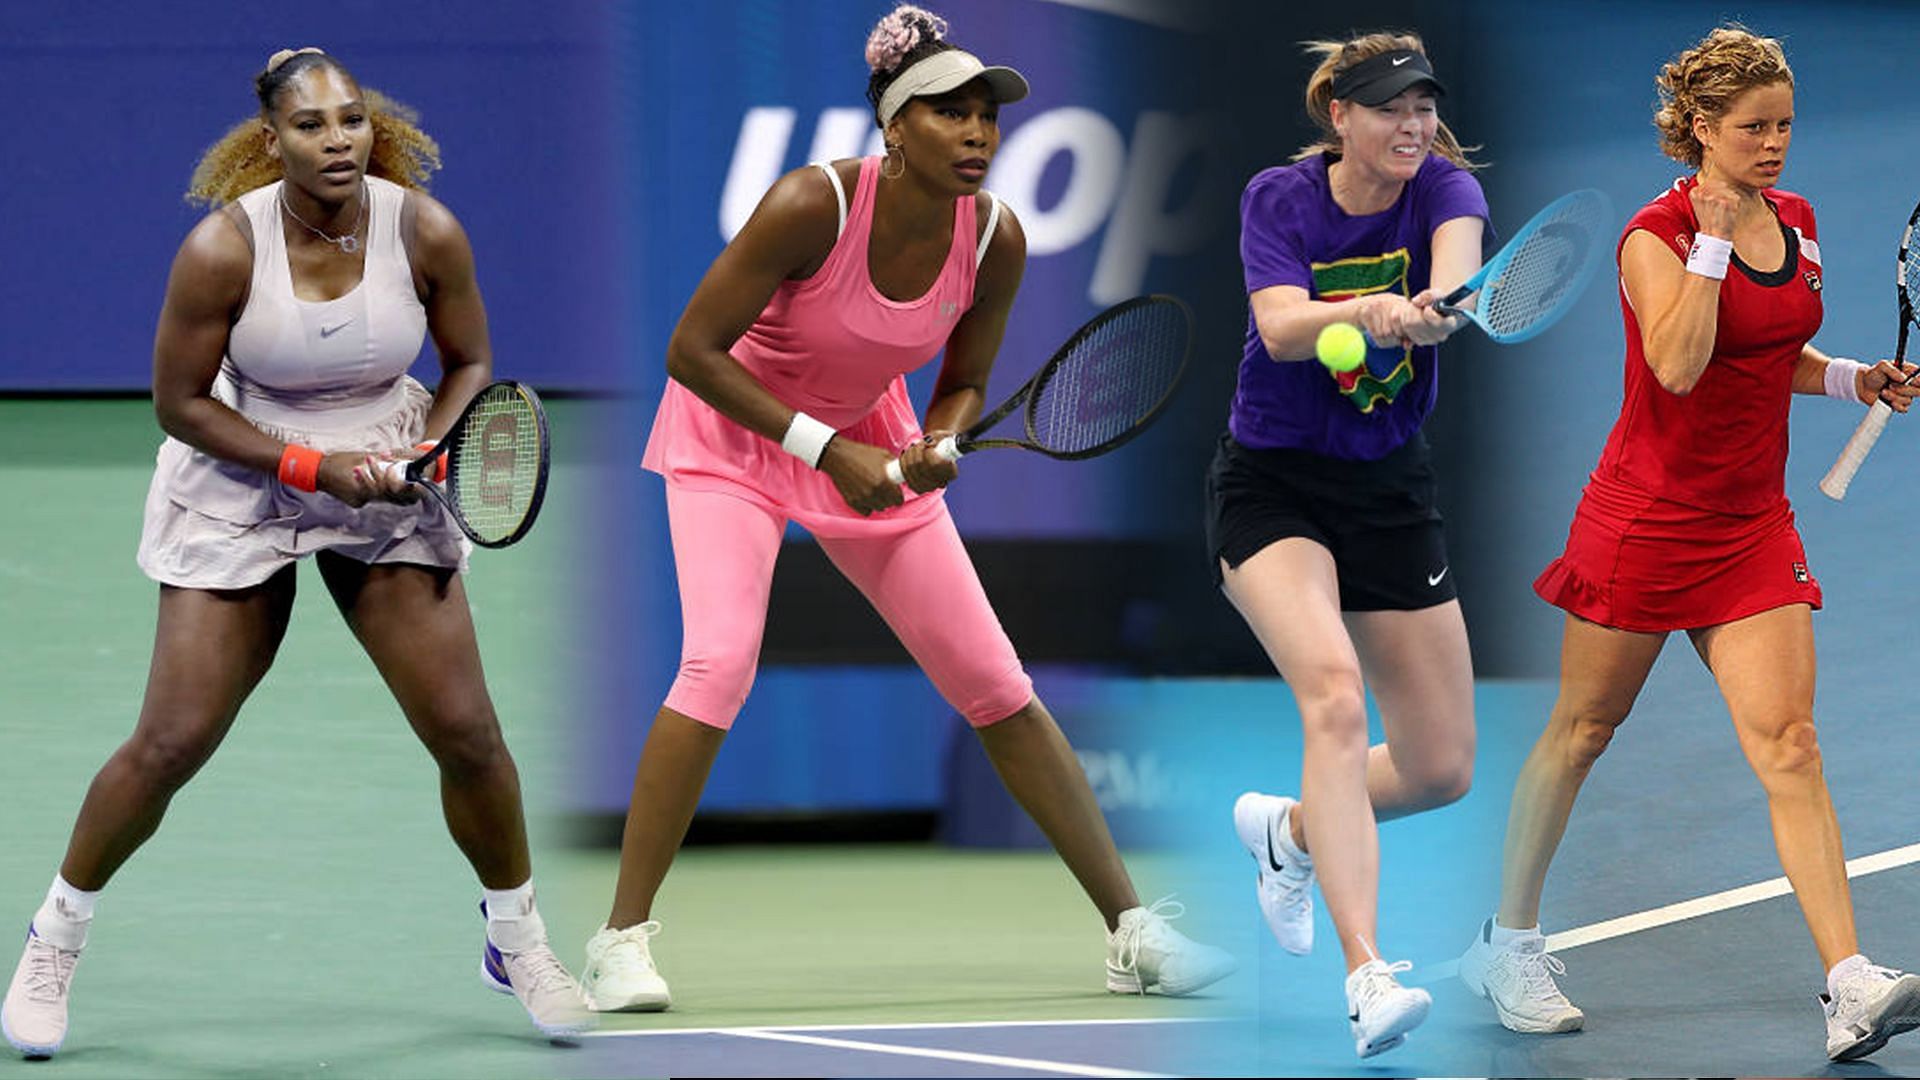 1 Record each of Serena Williams, Venus Williams, Maria Sharapova and Kim Clijsters that might never be broken